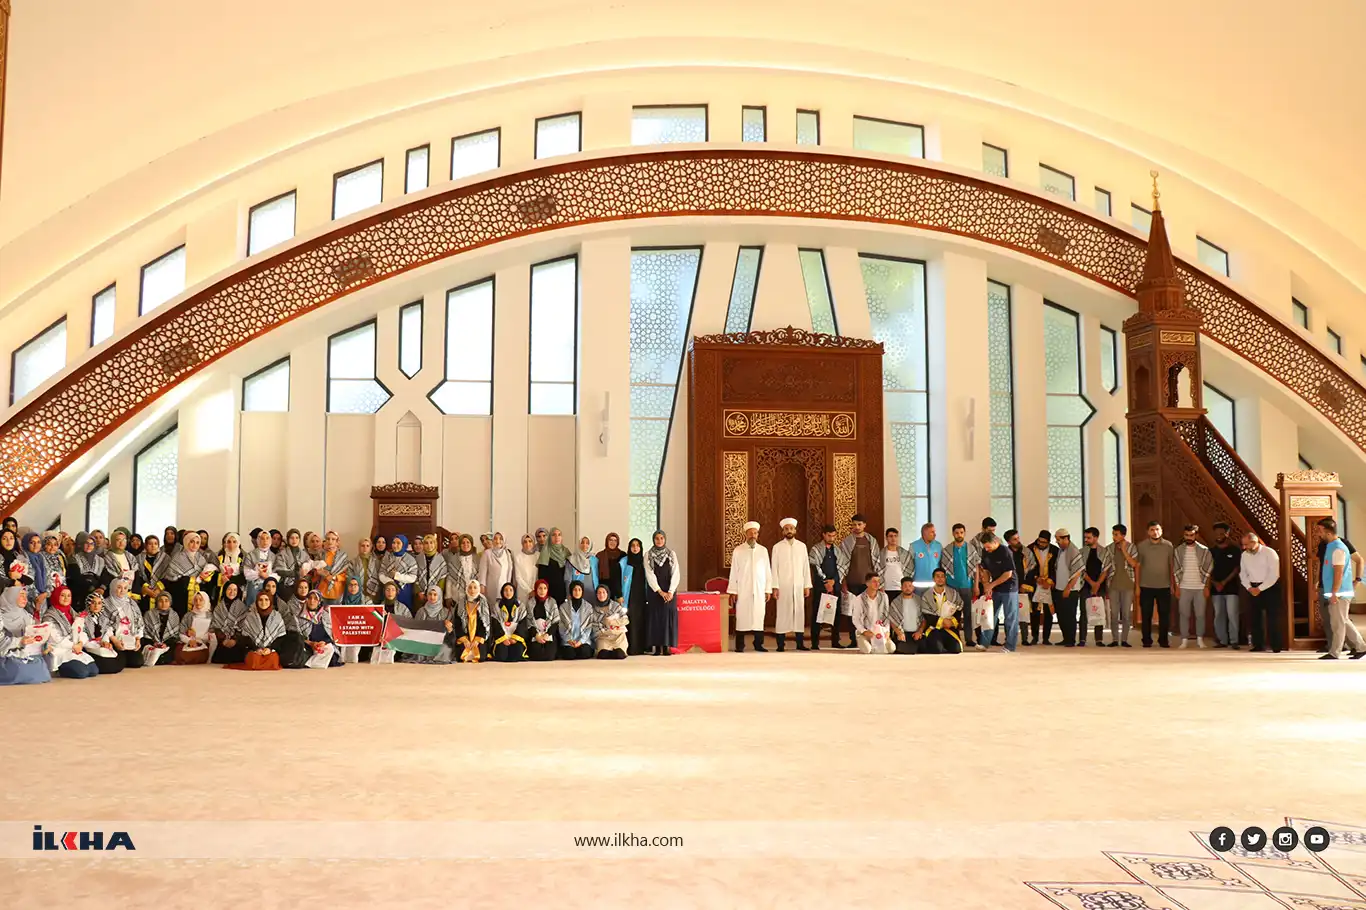 Inonu University graduates dedicate ceremony to Gaza, call for global action